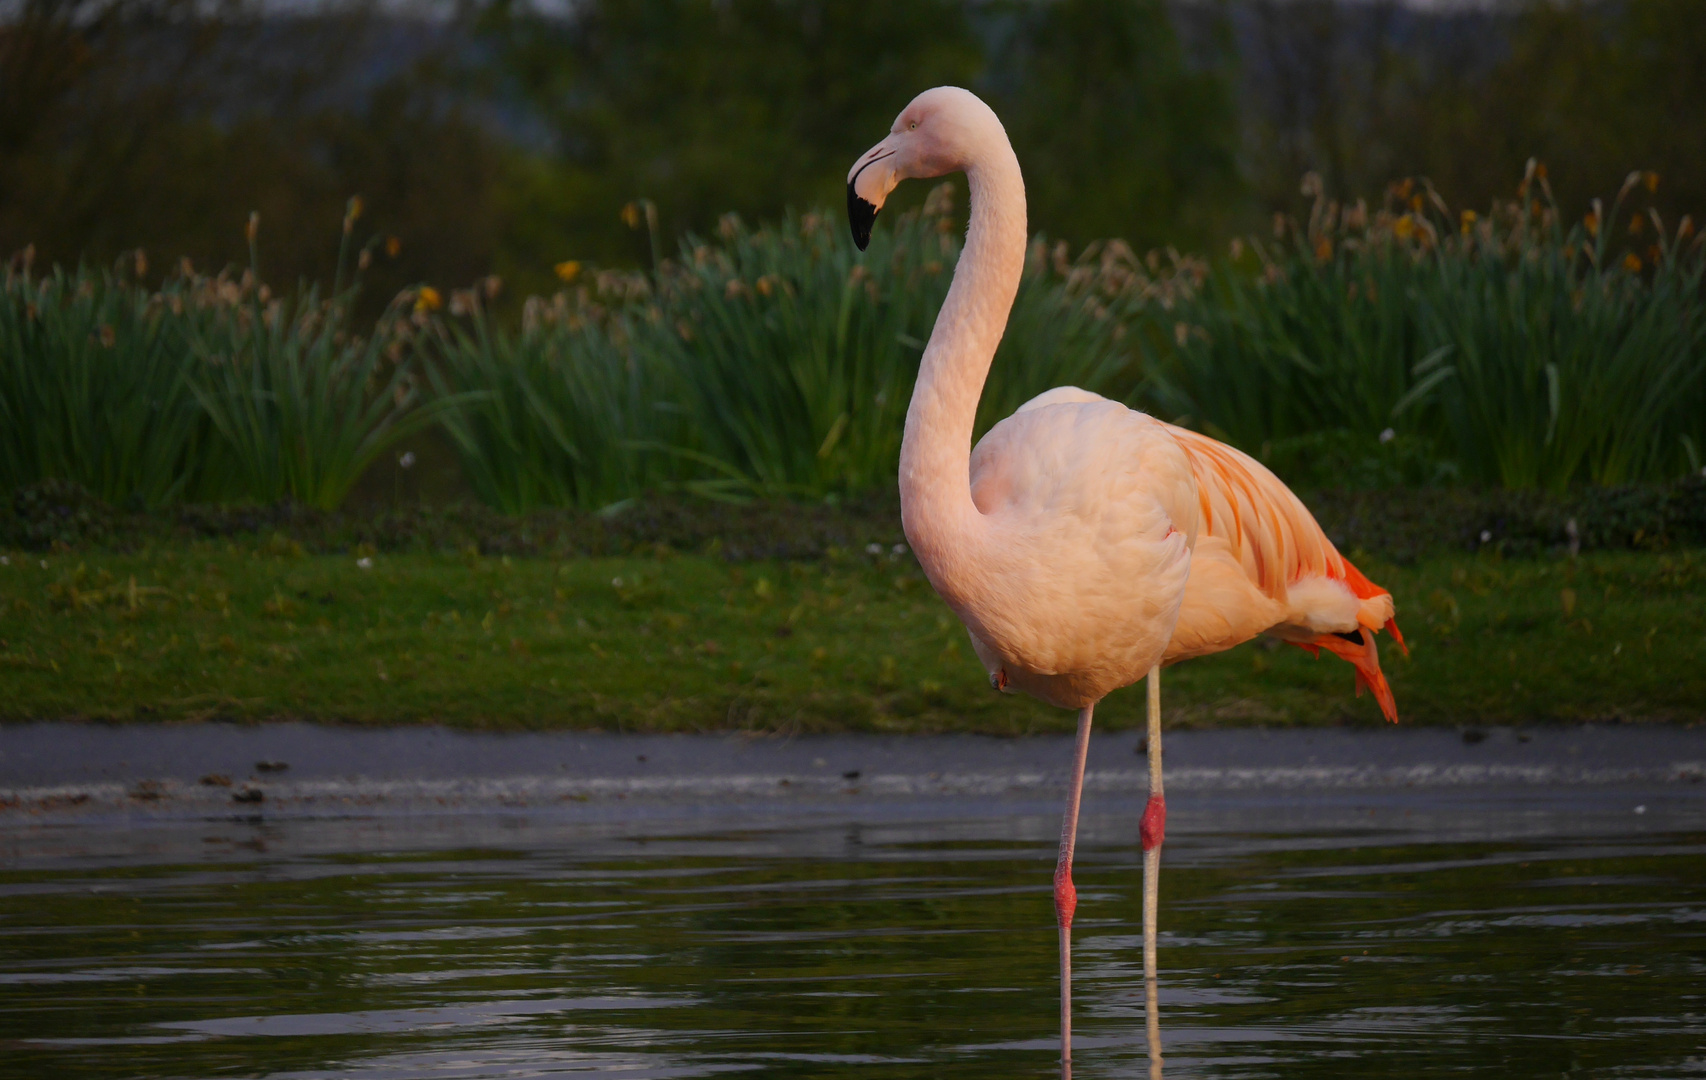 Flamingo am Abend